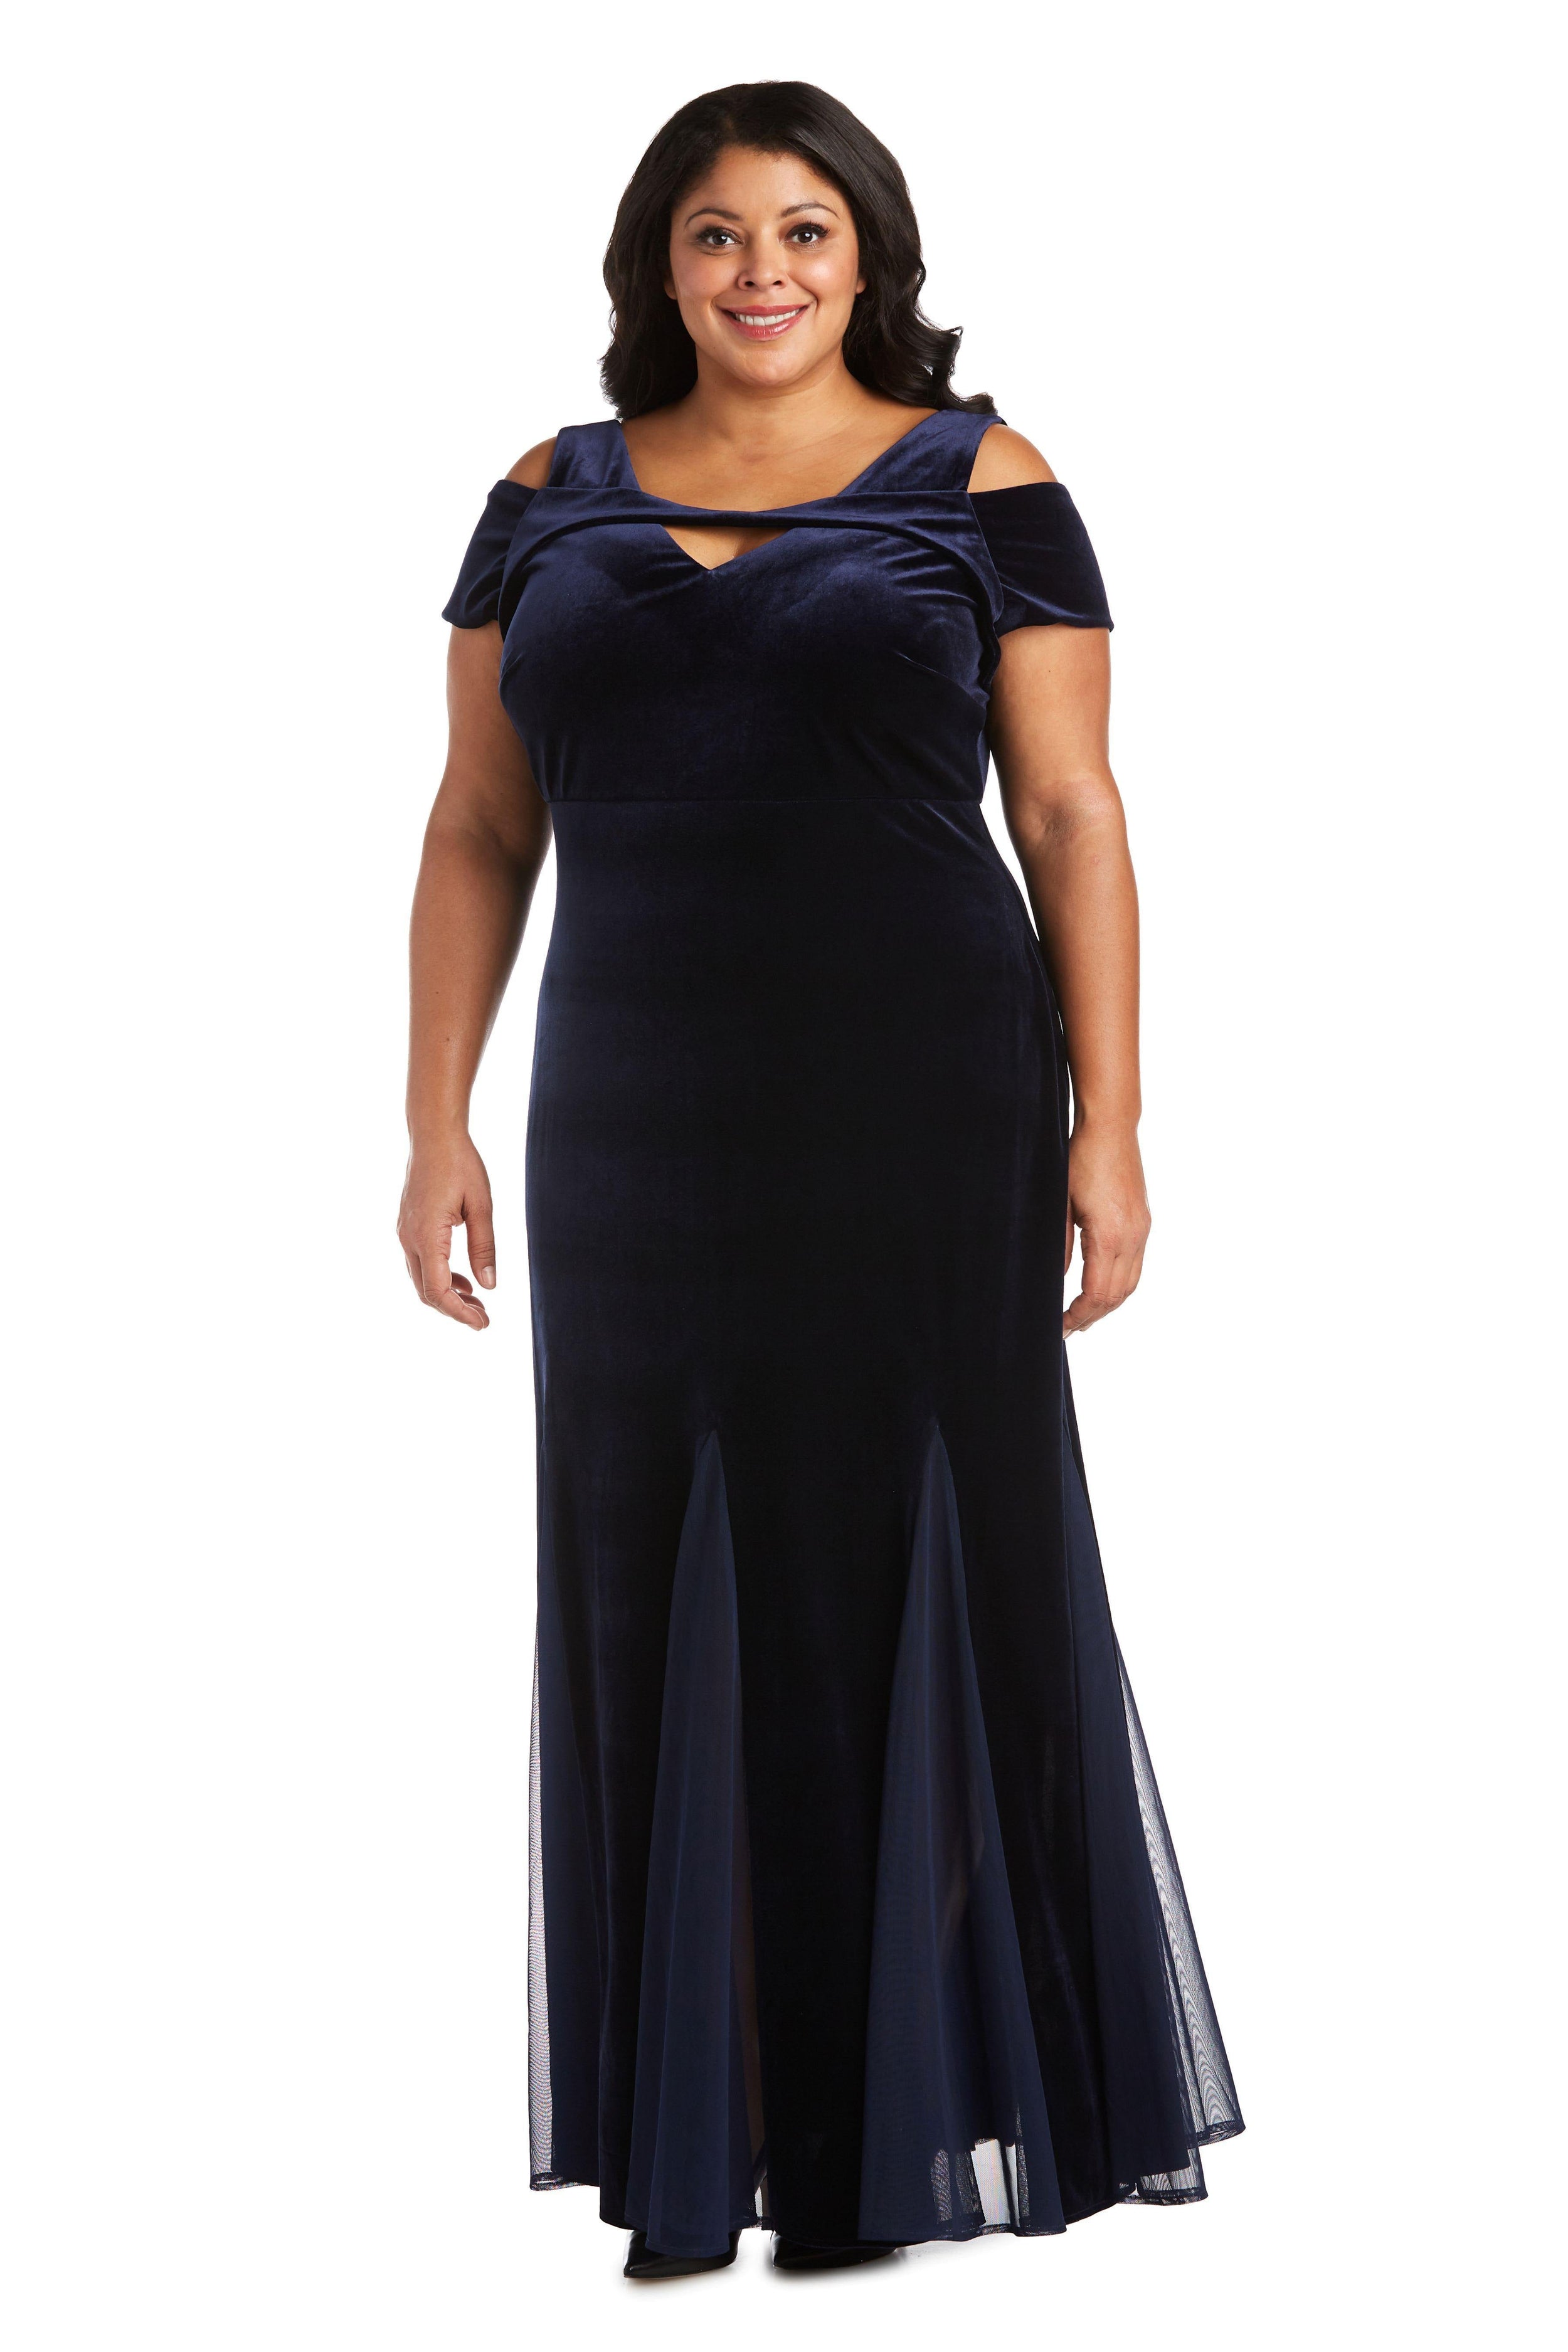 Nightway Long Plus Size Velvet Dress Sale - The Dress Outlet